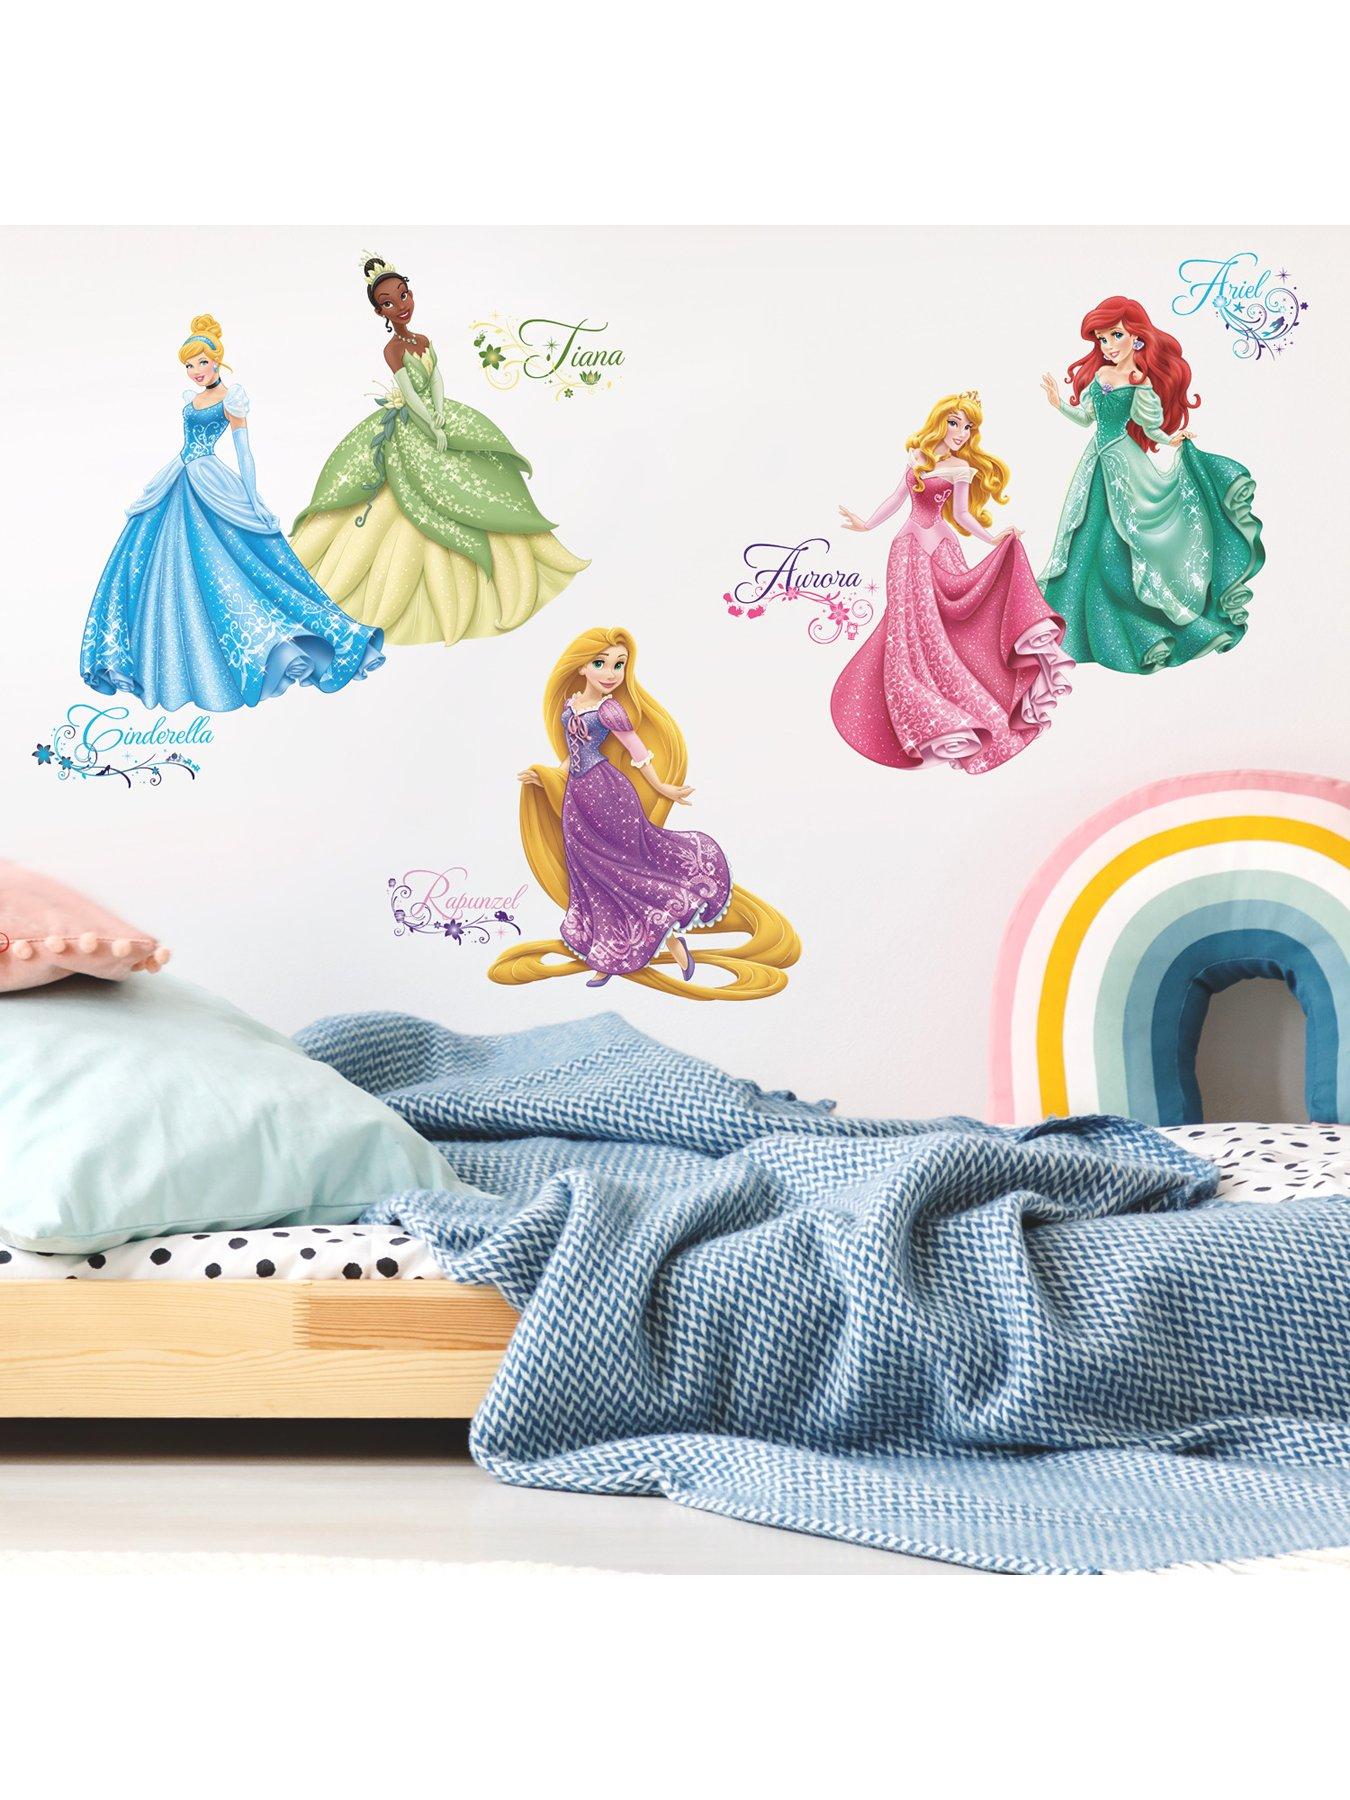 Disney Princess Ariel wall /cupboard sticker - large - 190